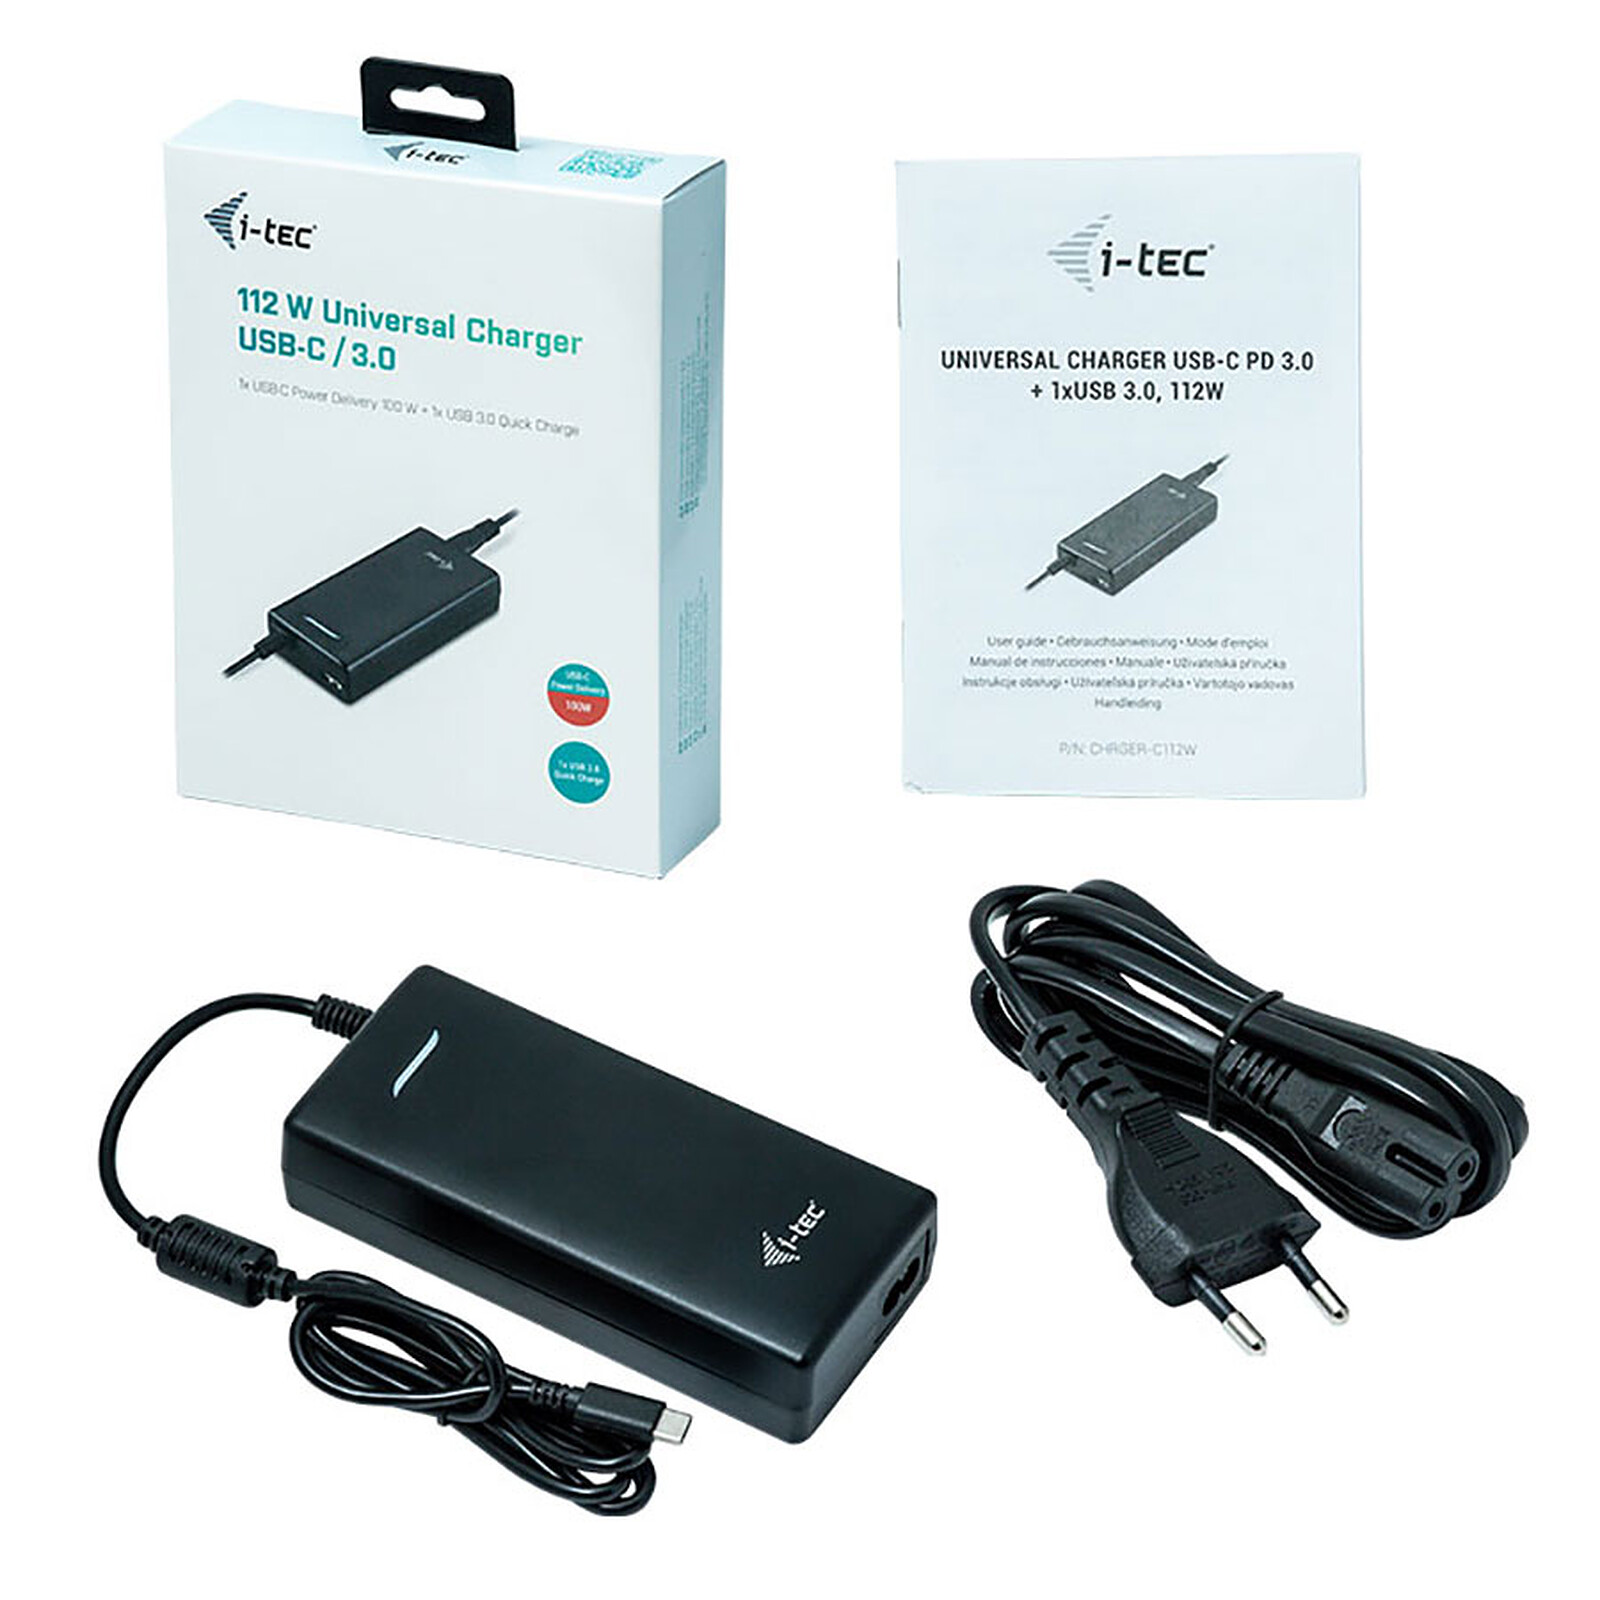 i-tec Universal Charger USB-C Power Delivery 3.0 + 1 x USB 3.0, 112 W - USB  - Garantie 3 ans LDLC